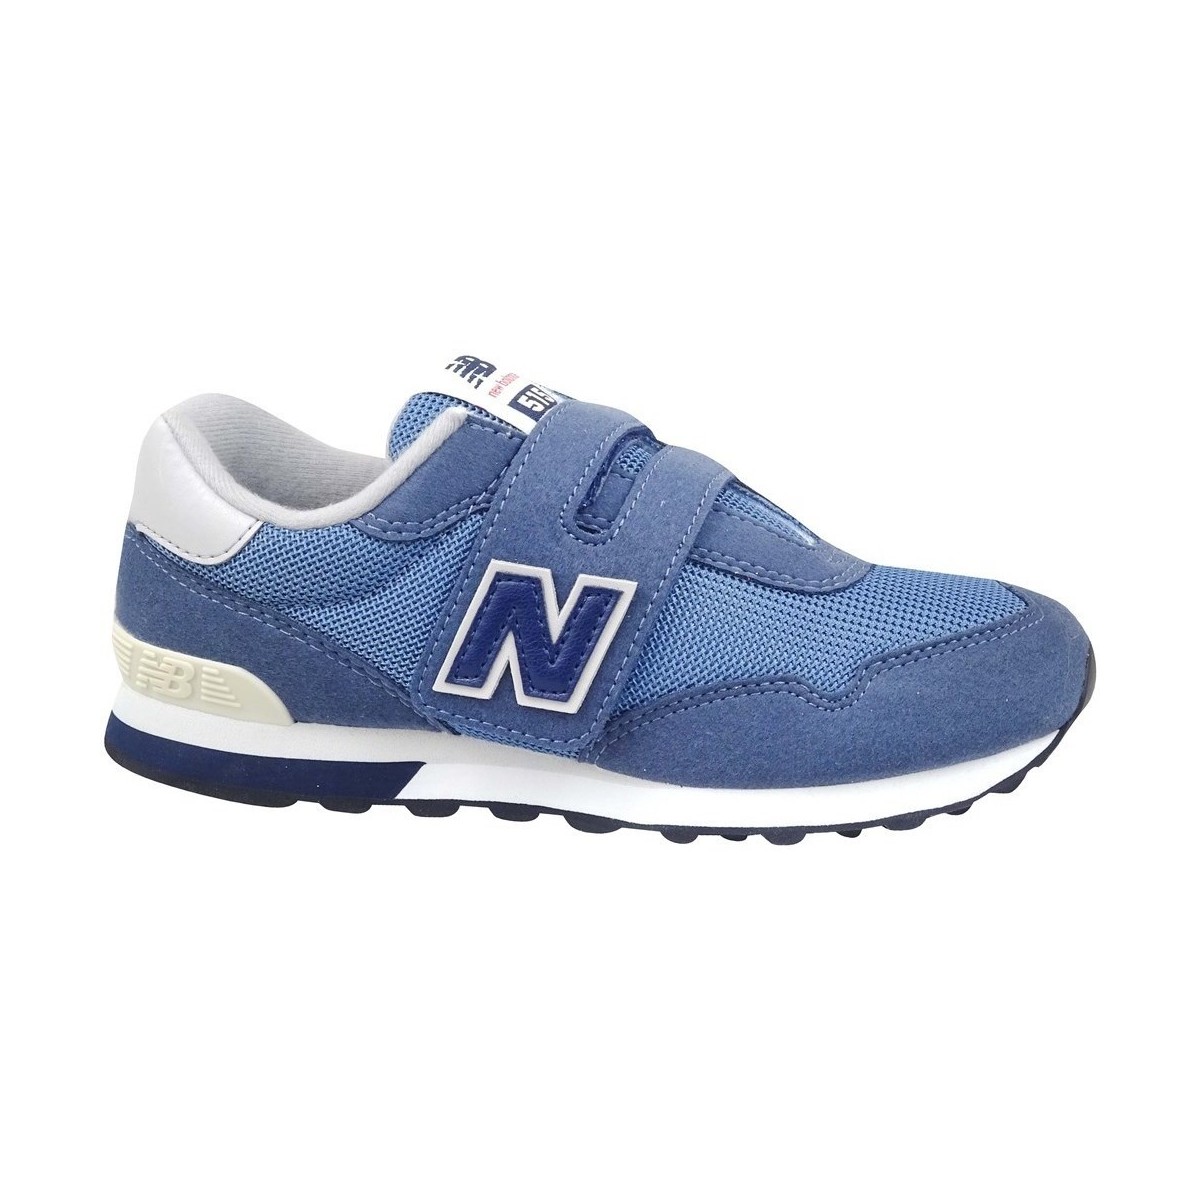 Pantofi Copii Pantofi sport Casual New Balance 515 albastru